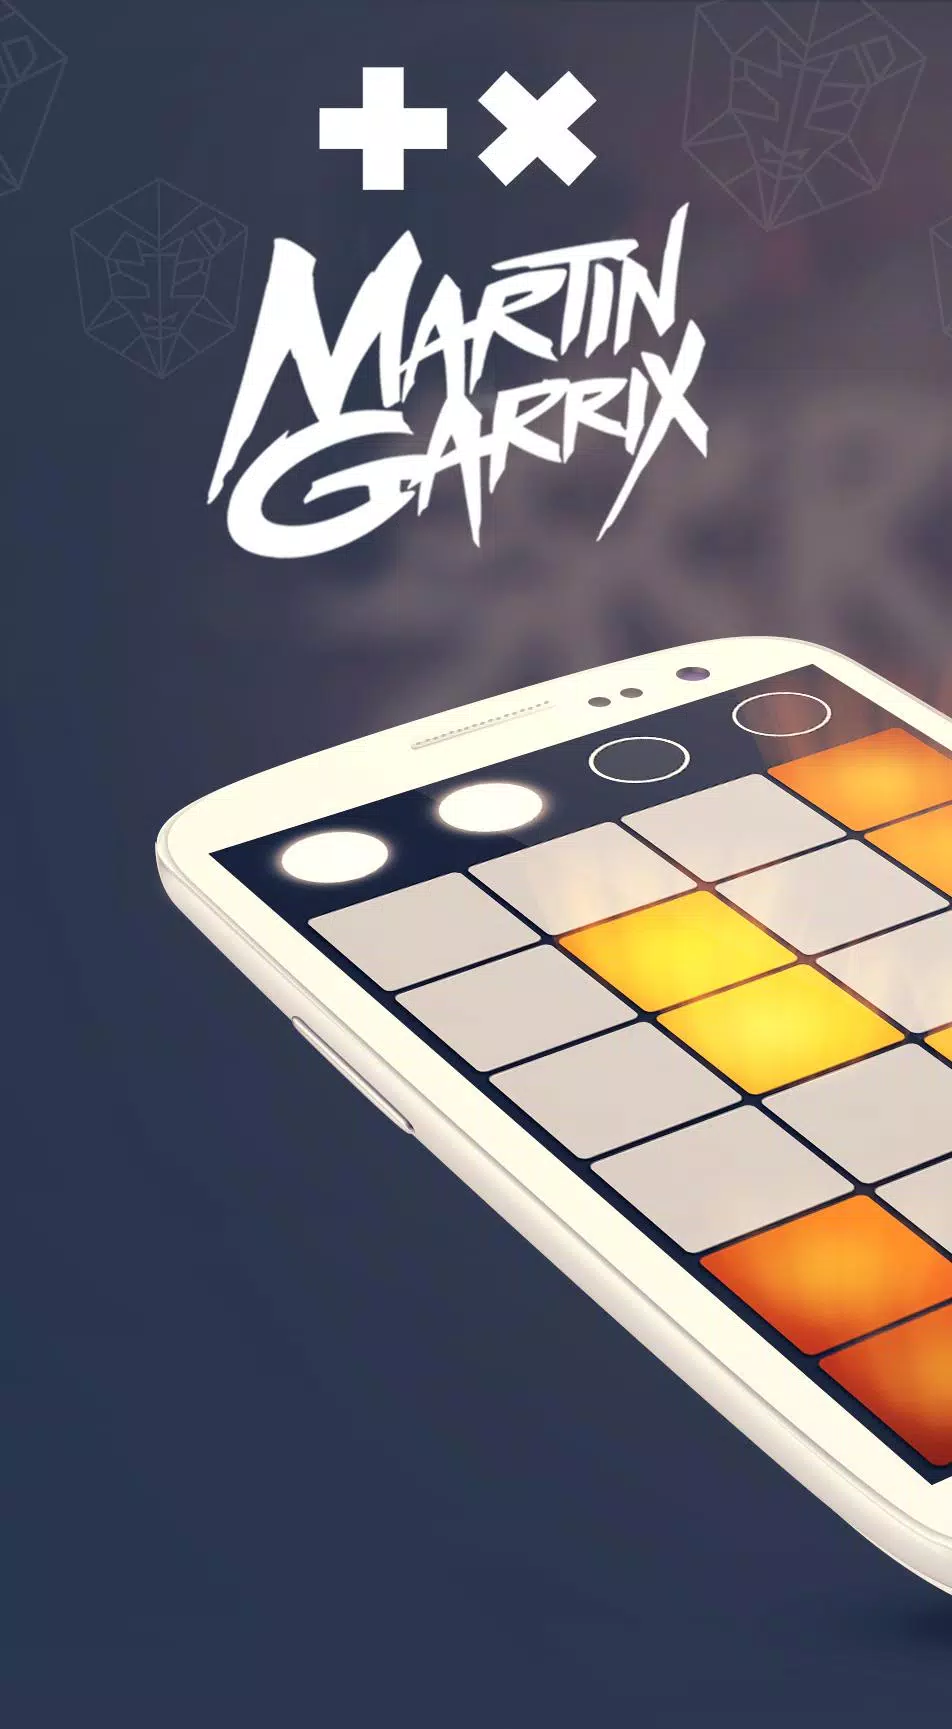 Martin Garrix Animals drumpads APK for Android Download